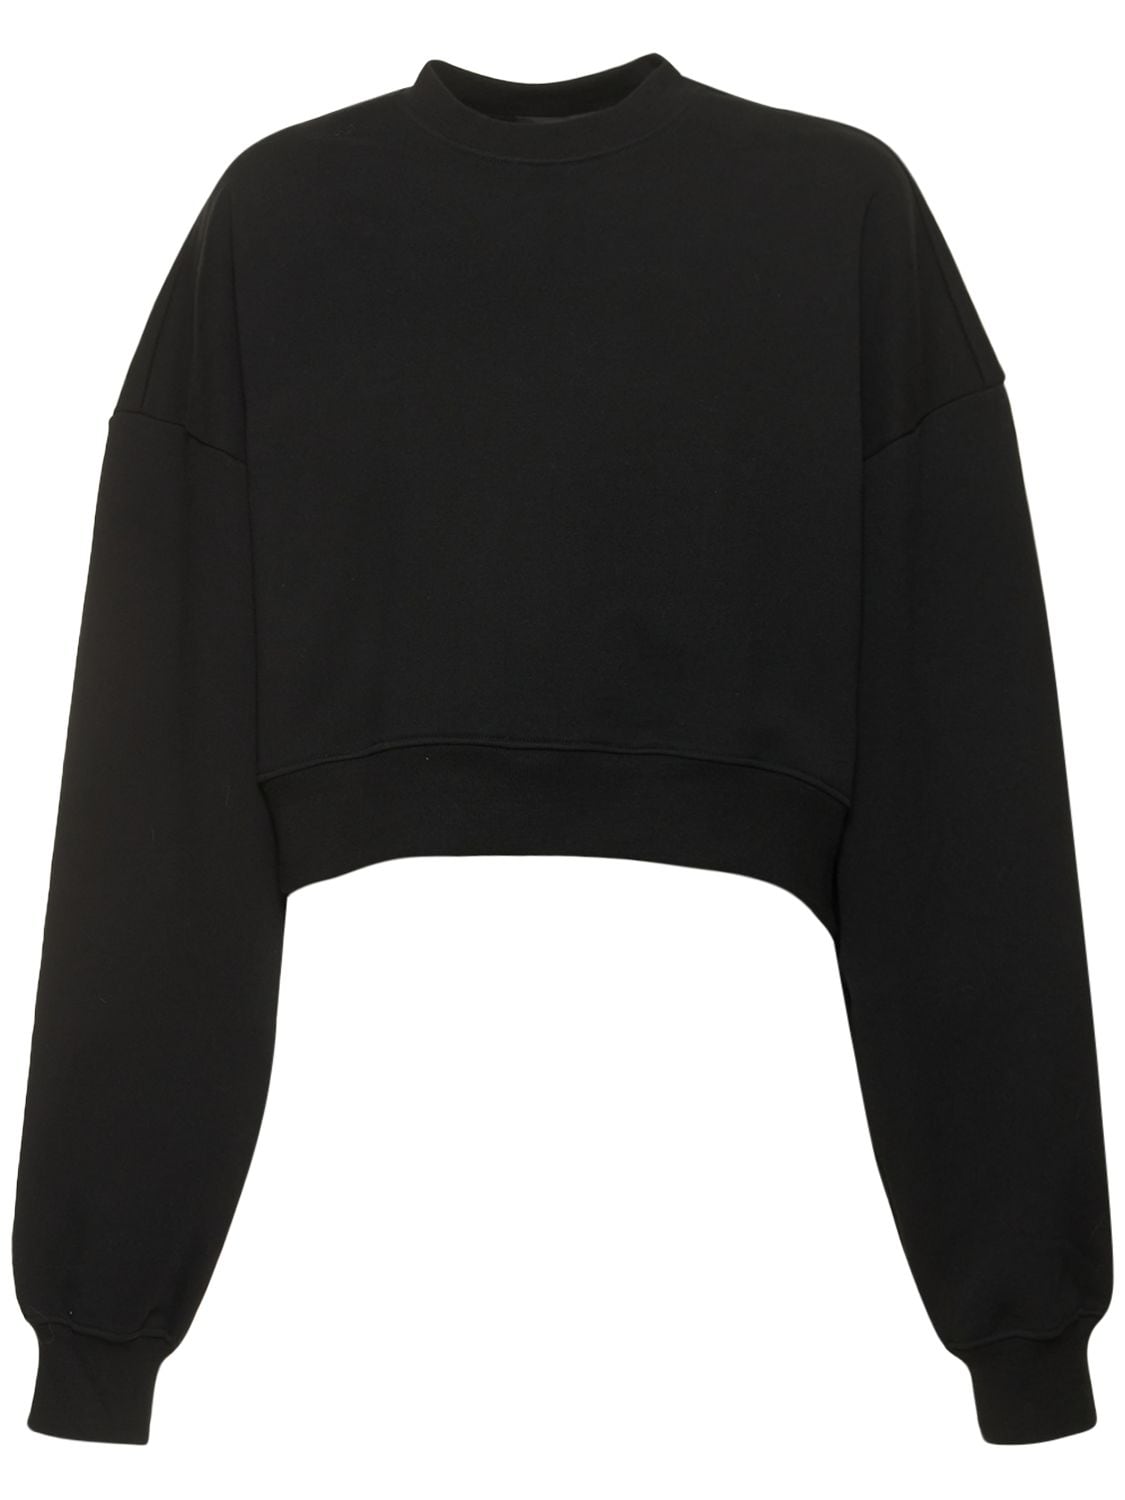 Image of Hailey Bieber Cropped Cotton Sweatshirt